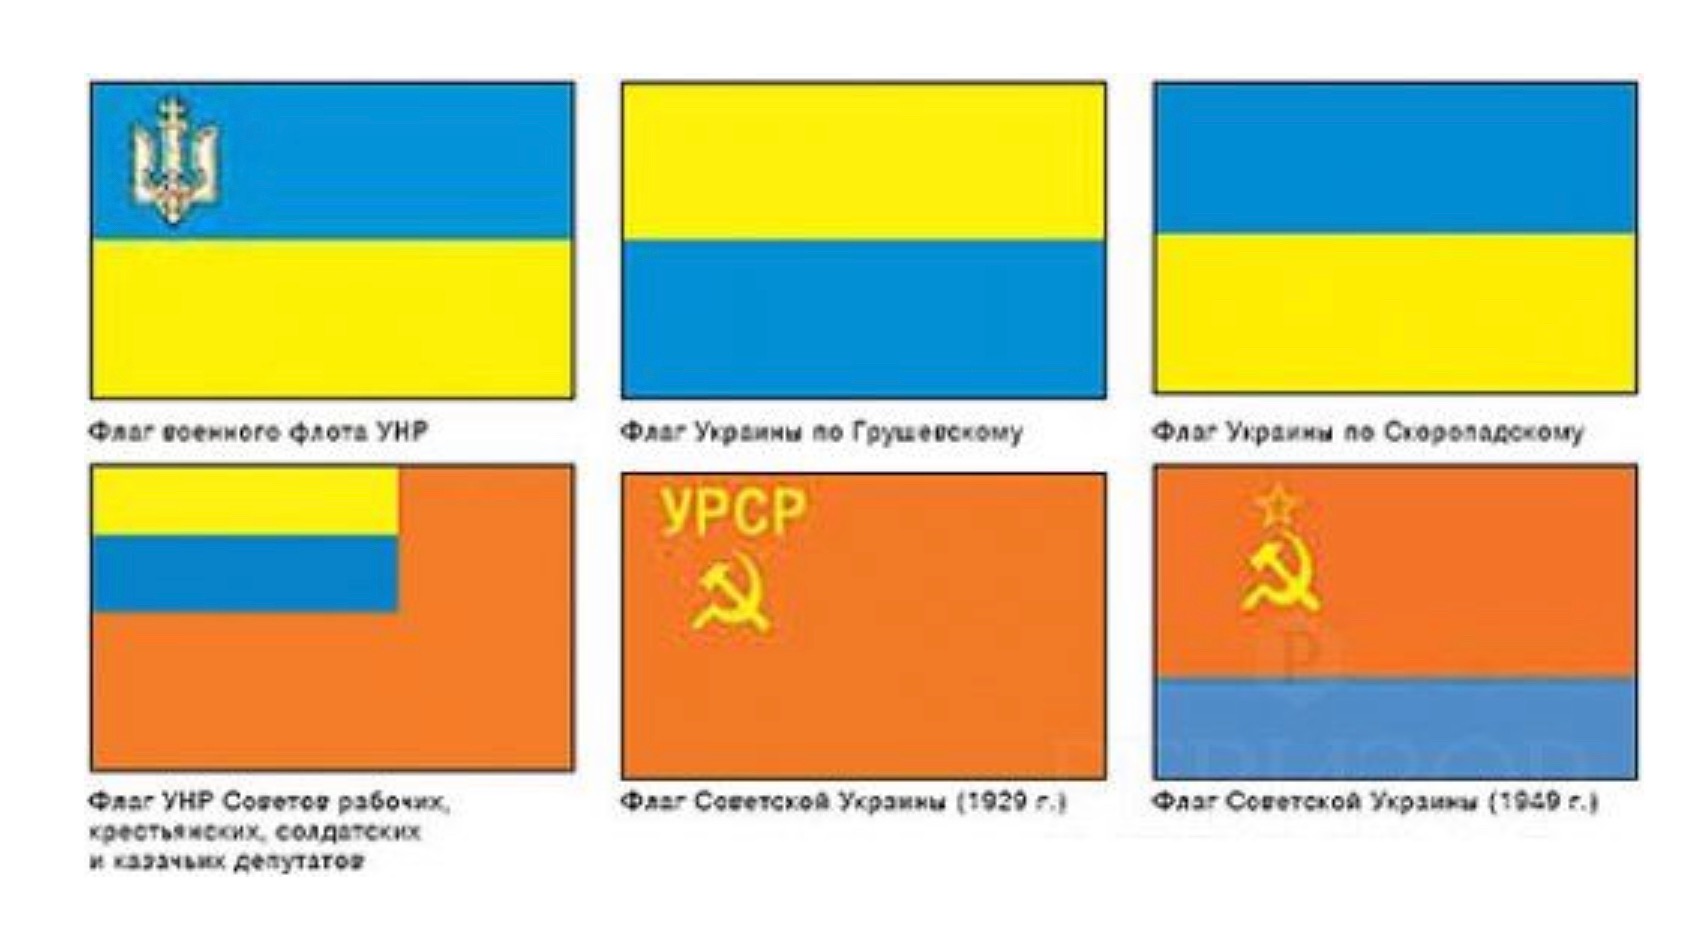 Как называется желто синий флаг. Желто-голубой флаг УНР. Флаг Украины до 1917 года. Флаг Украины до революции 1917 года. Жёлто-синий флаг УНР.